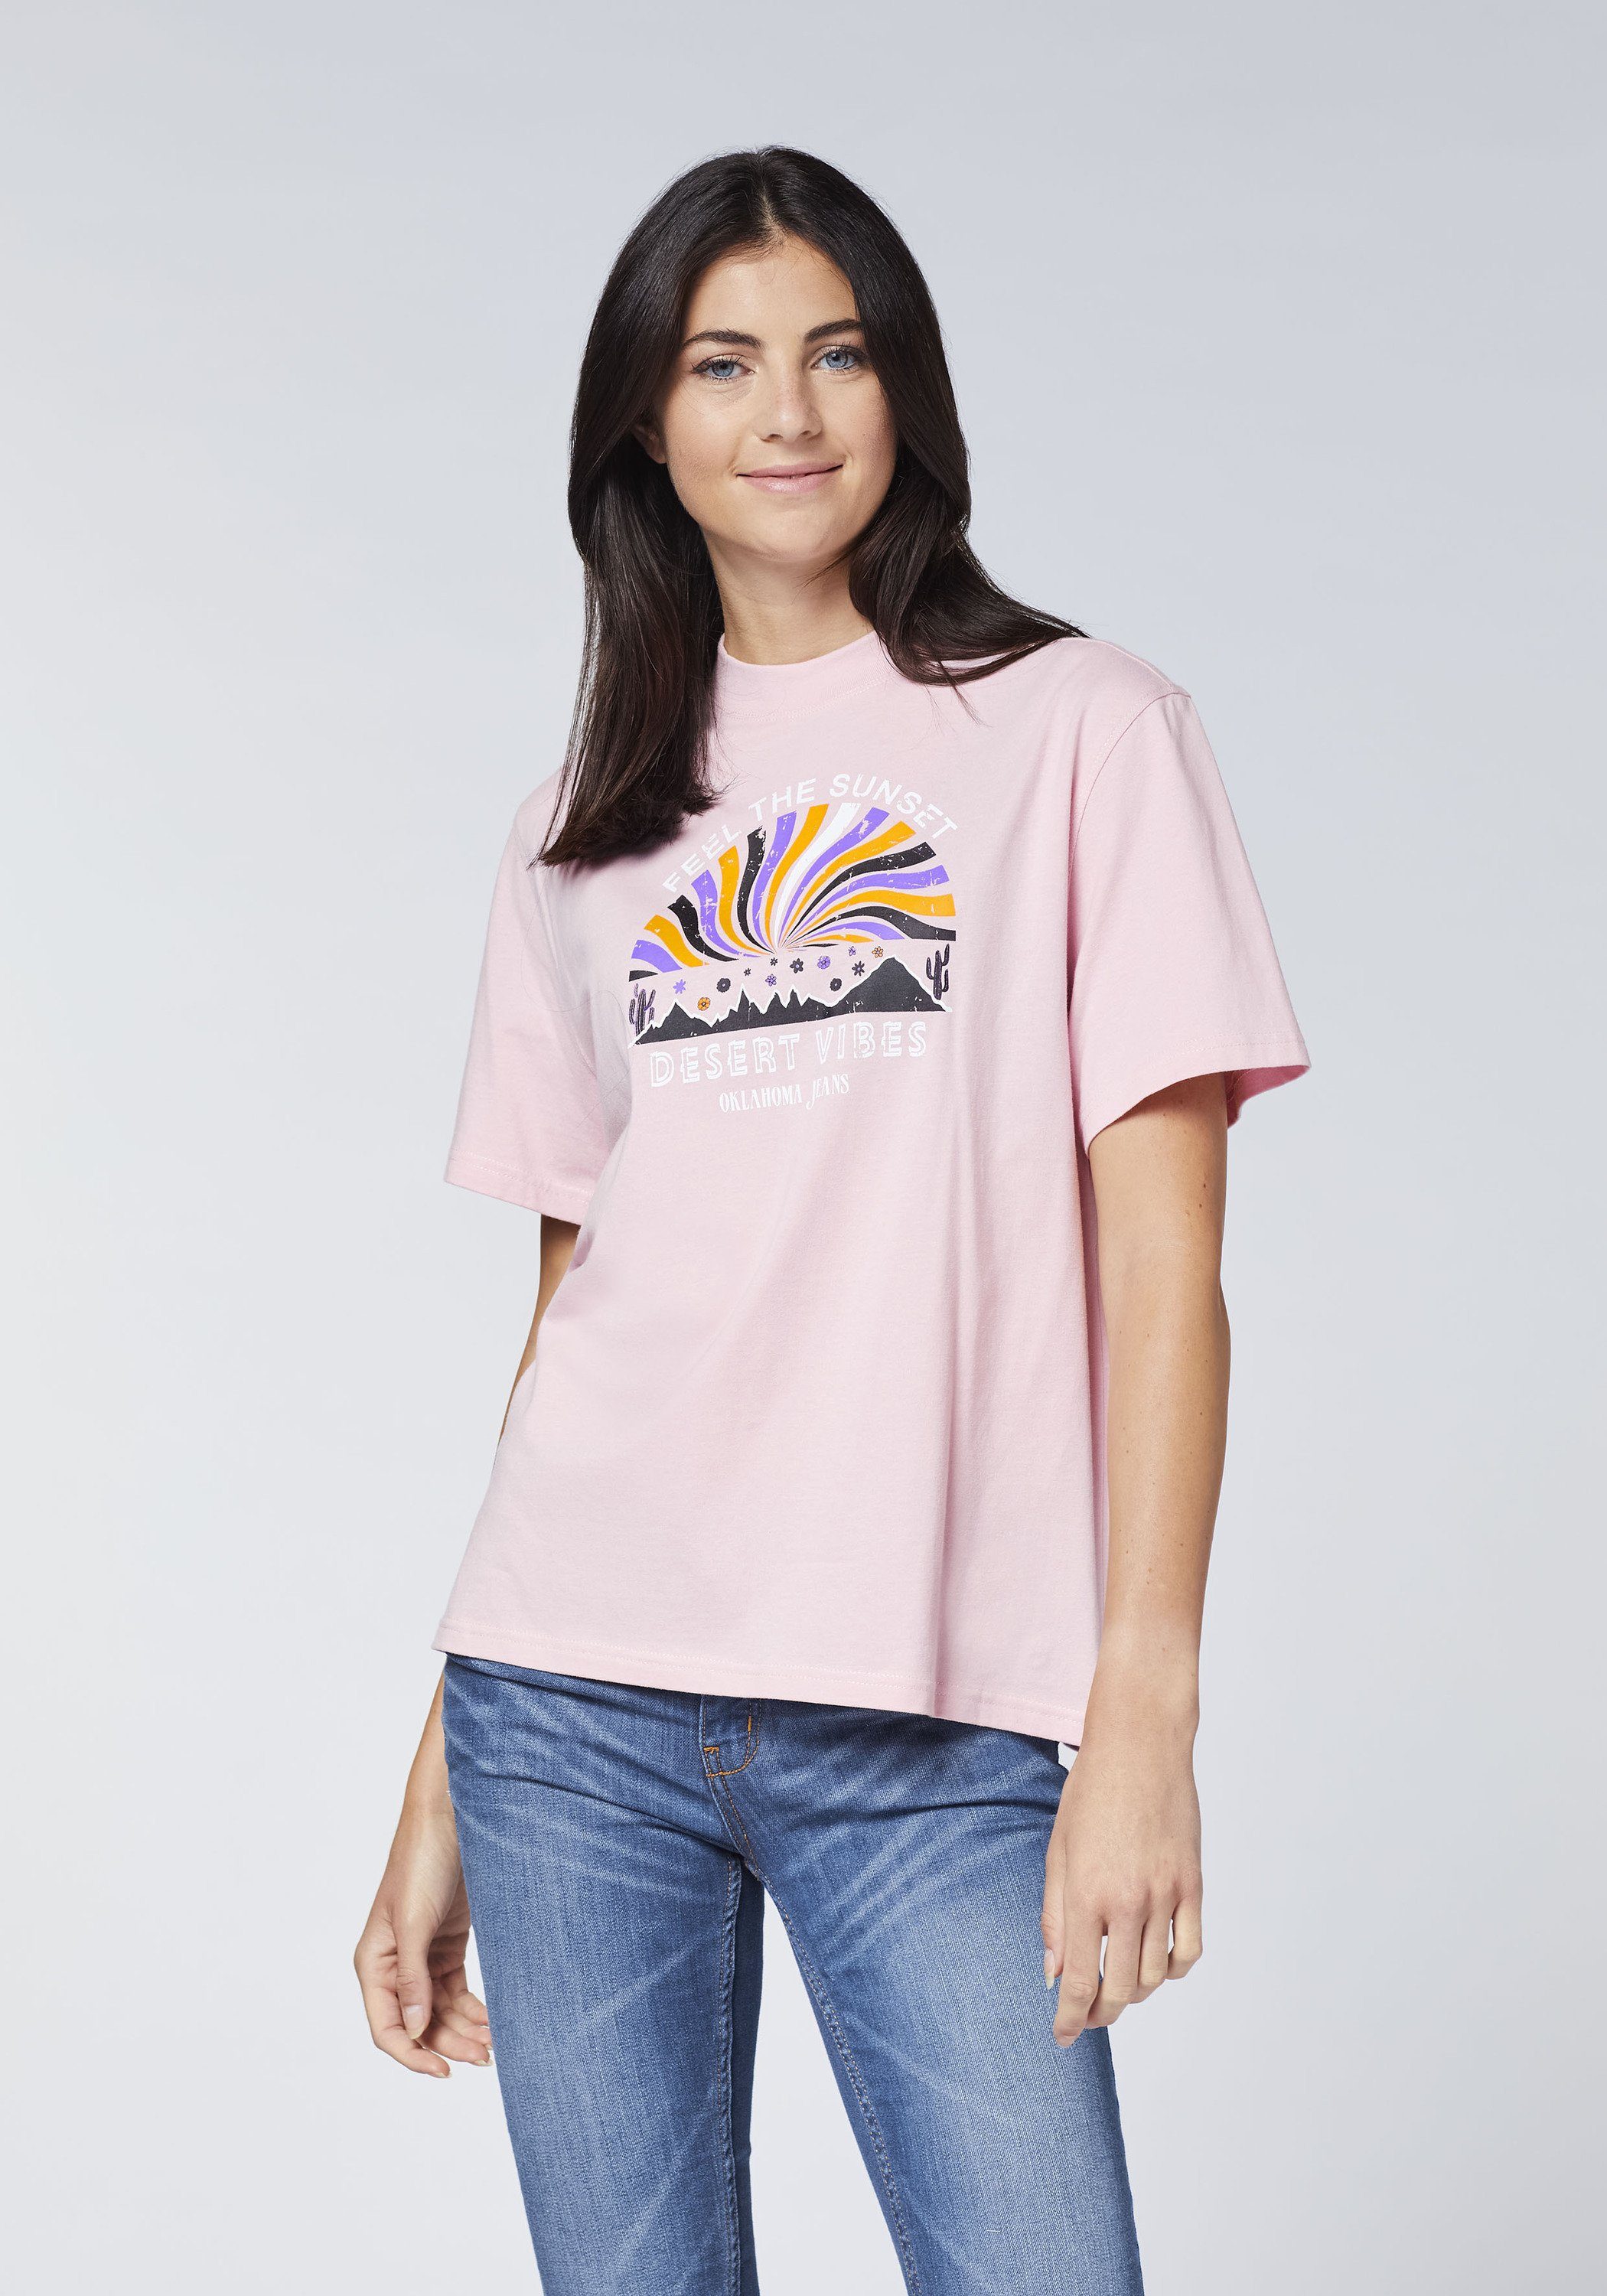 Oklahoma Jeans Print-Shirt Desert-Motiv Nectar 14-2305 mit Pink